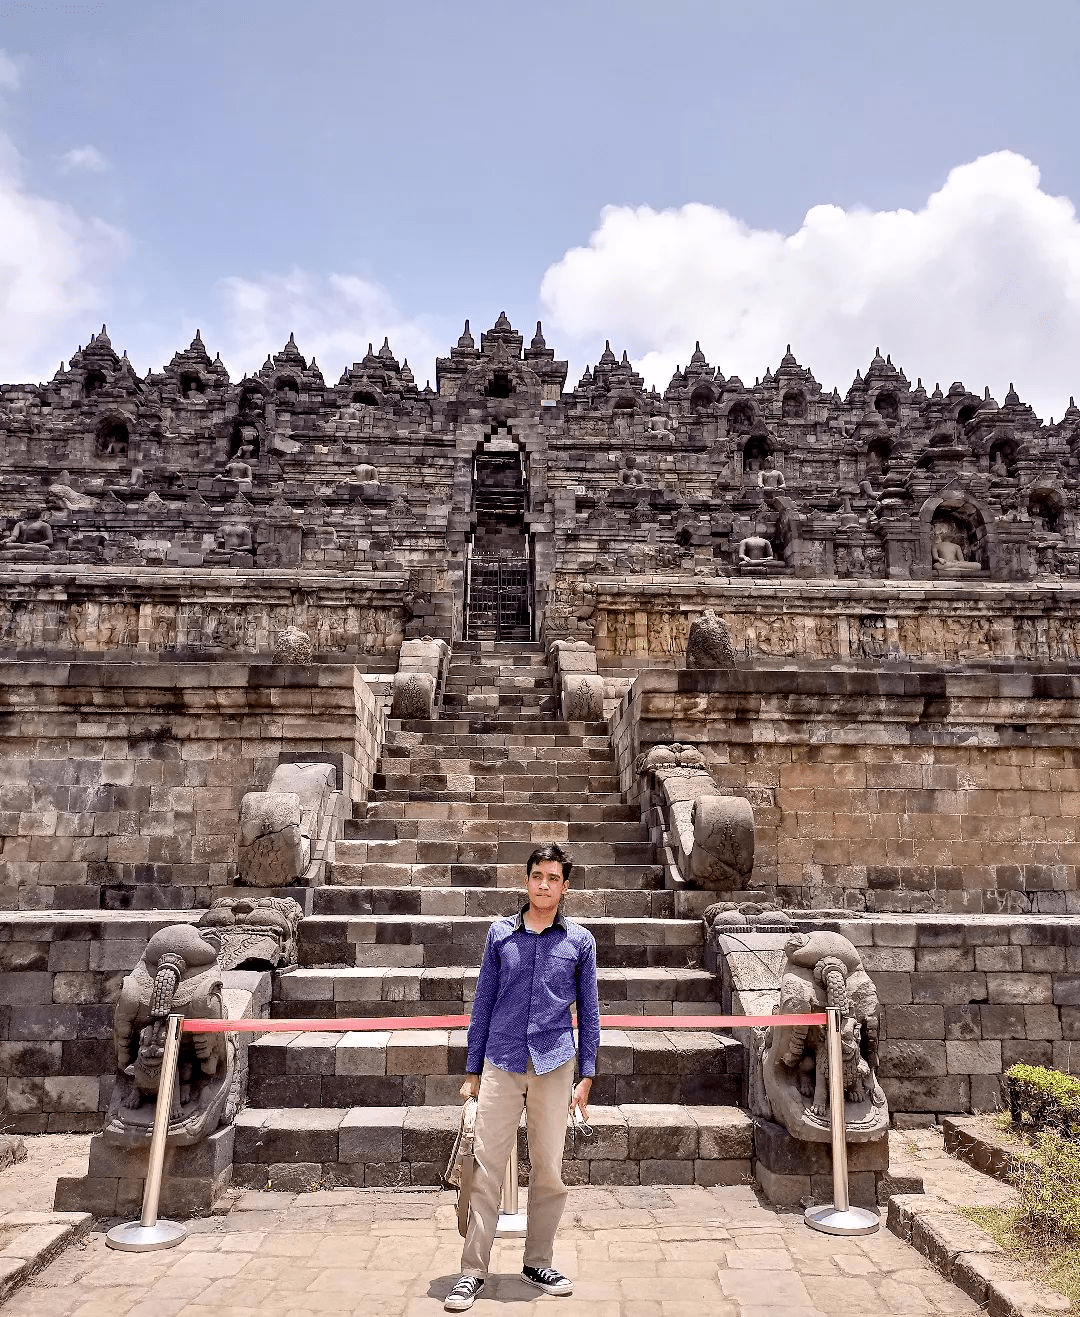 Borobodur Temple at Yogyakarta, Indonesia